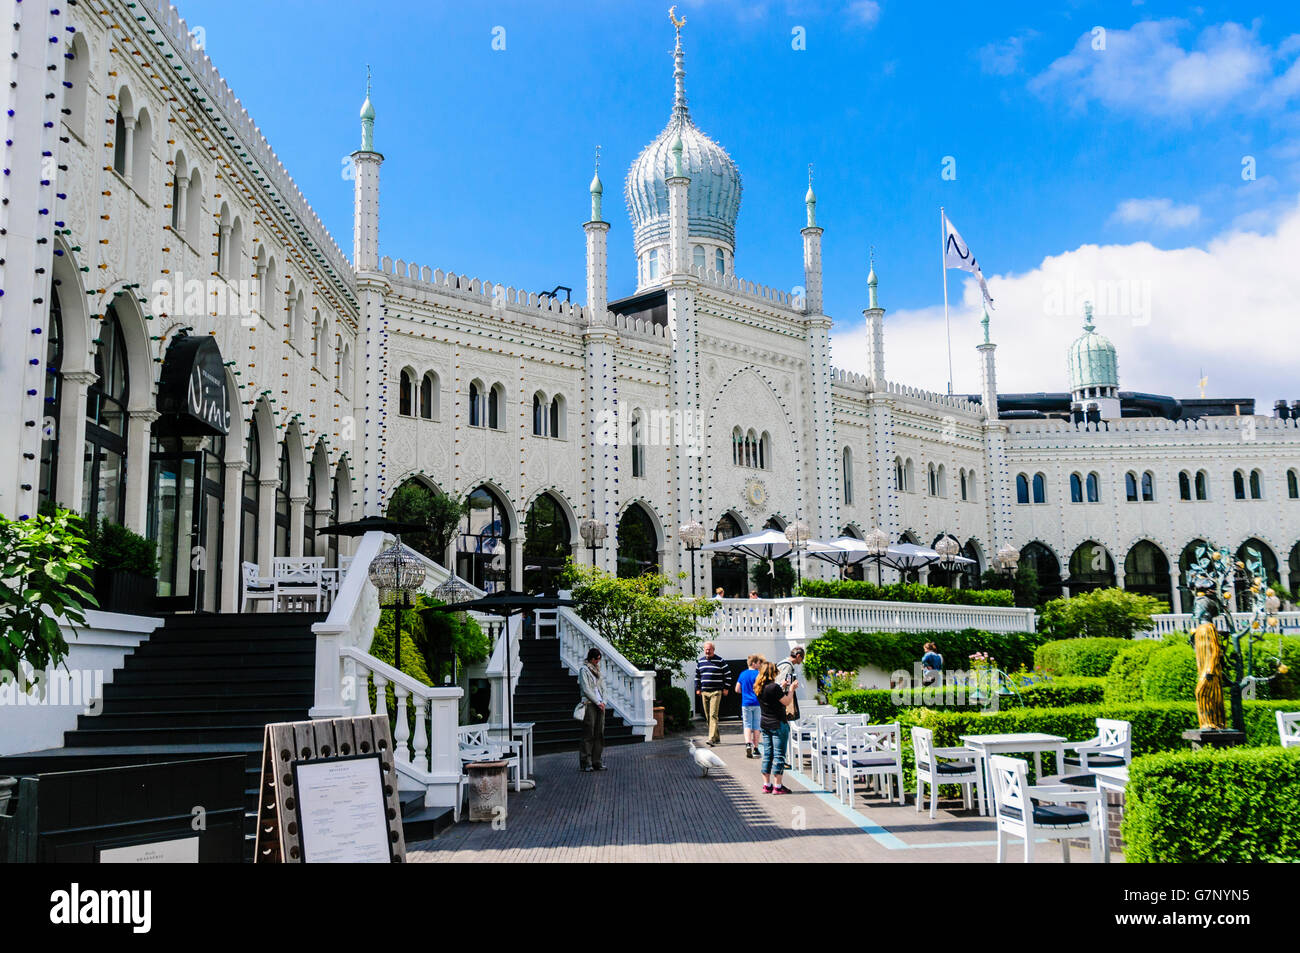 Moorish Palace, the Nimb Hotel and Restaurant, Tivoli Garden amusement park and pleasure garden in Copenhagen, Denmark. Stock Photo